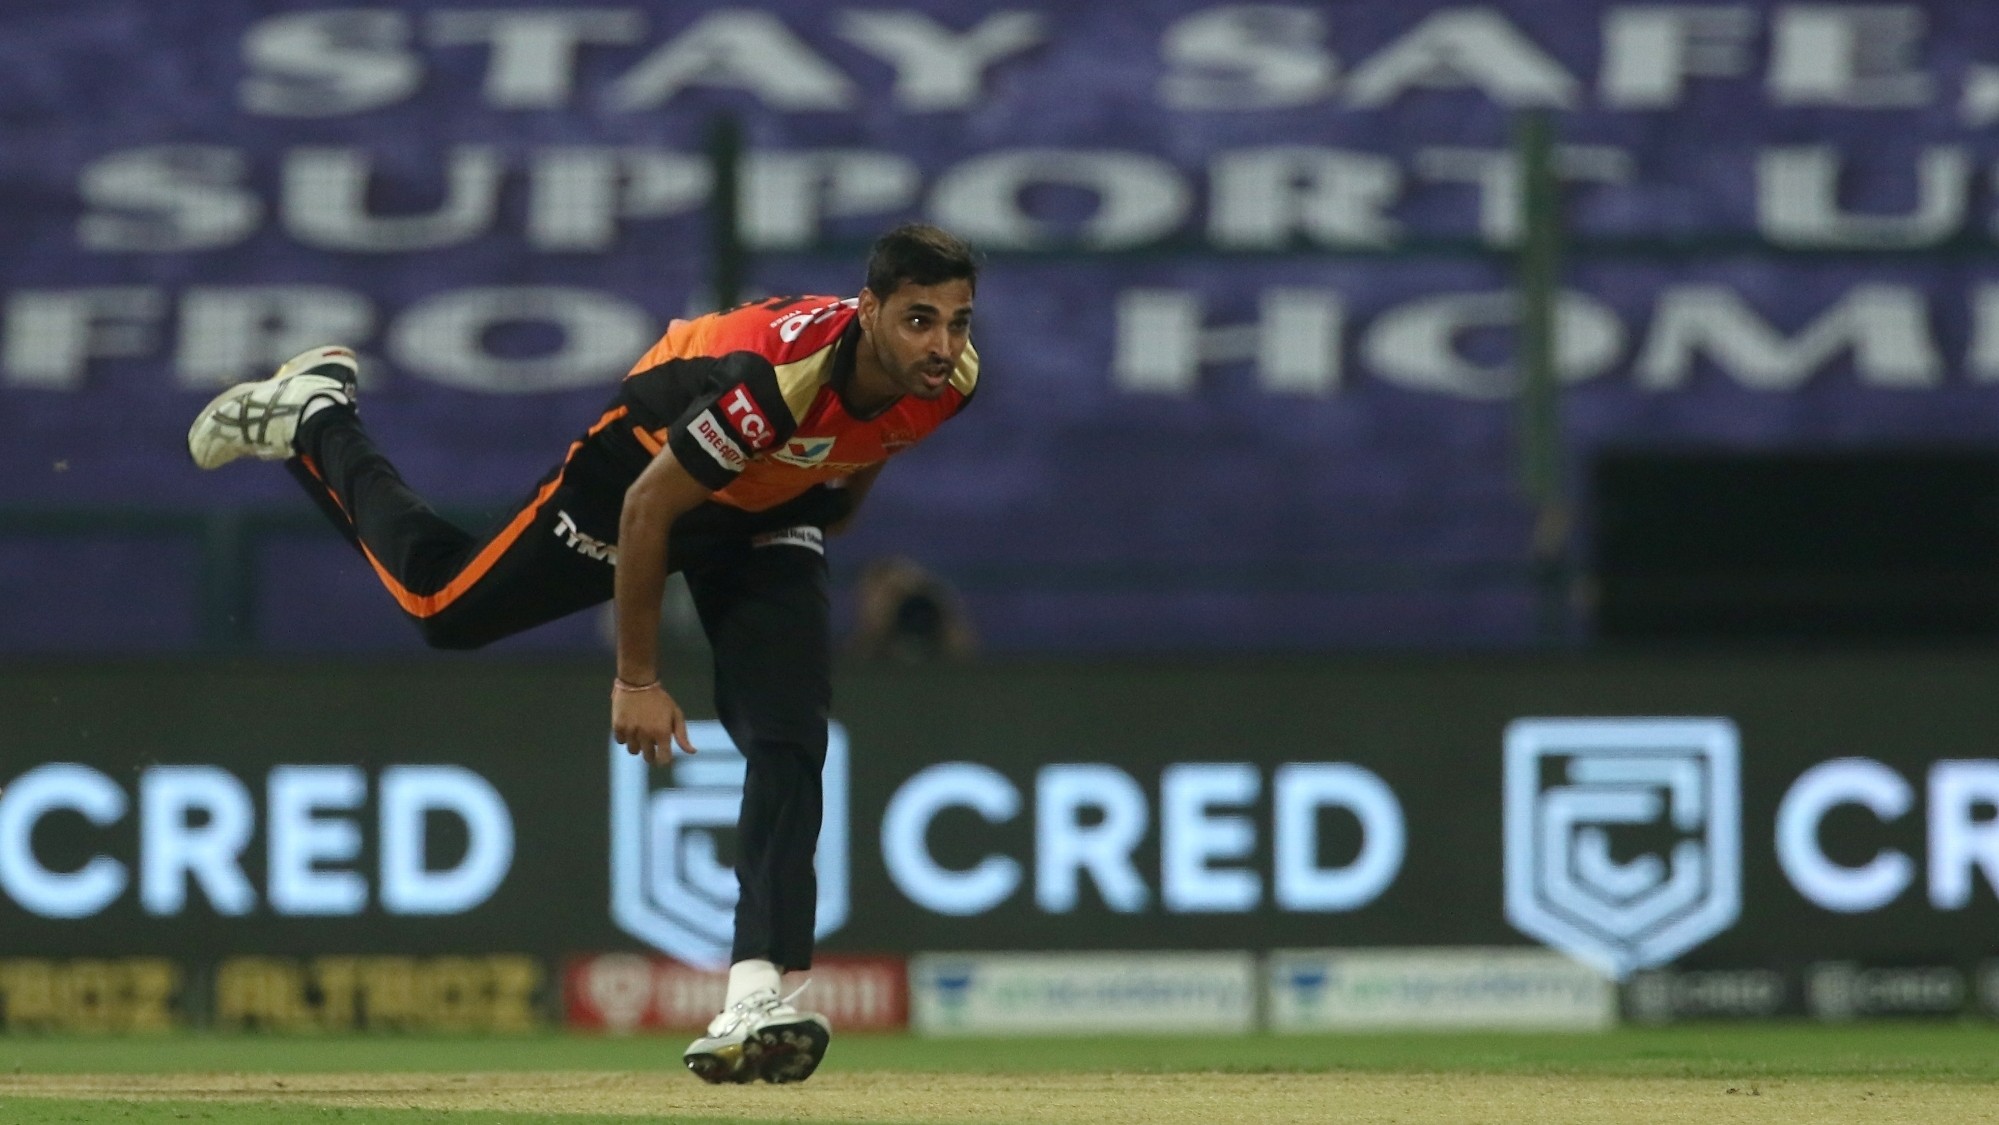 Injured Bhuvneshwar Kumar ruled out for 6 months, likely to return in IPL 2021